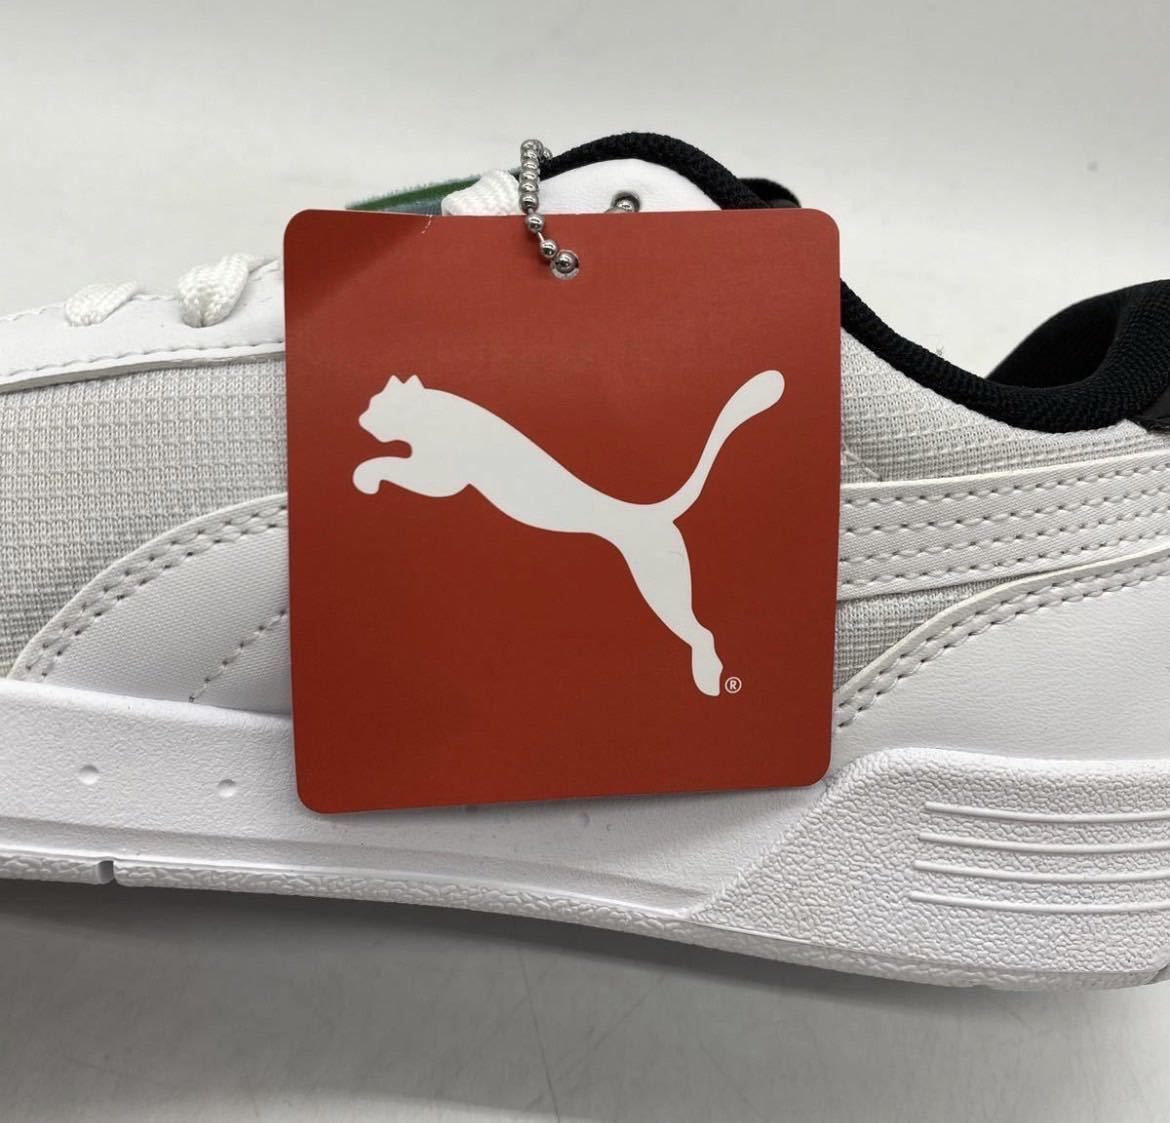 [23.5cm] new goods PUMA CARACAL STYLE WHITE Puma Cara karu style white lady's sneakers box less .(371116-02) 2314